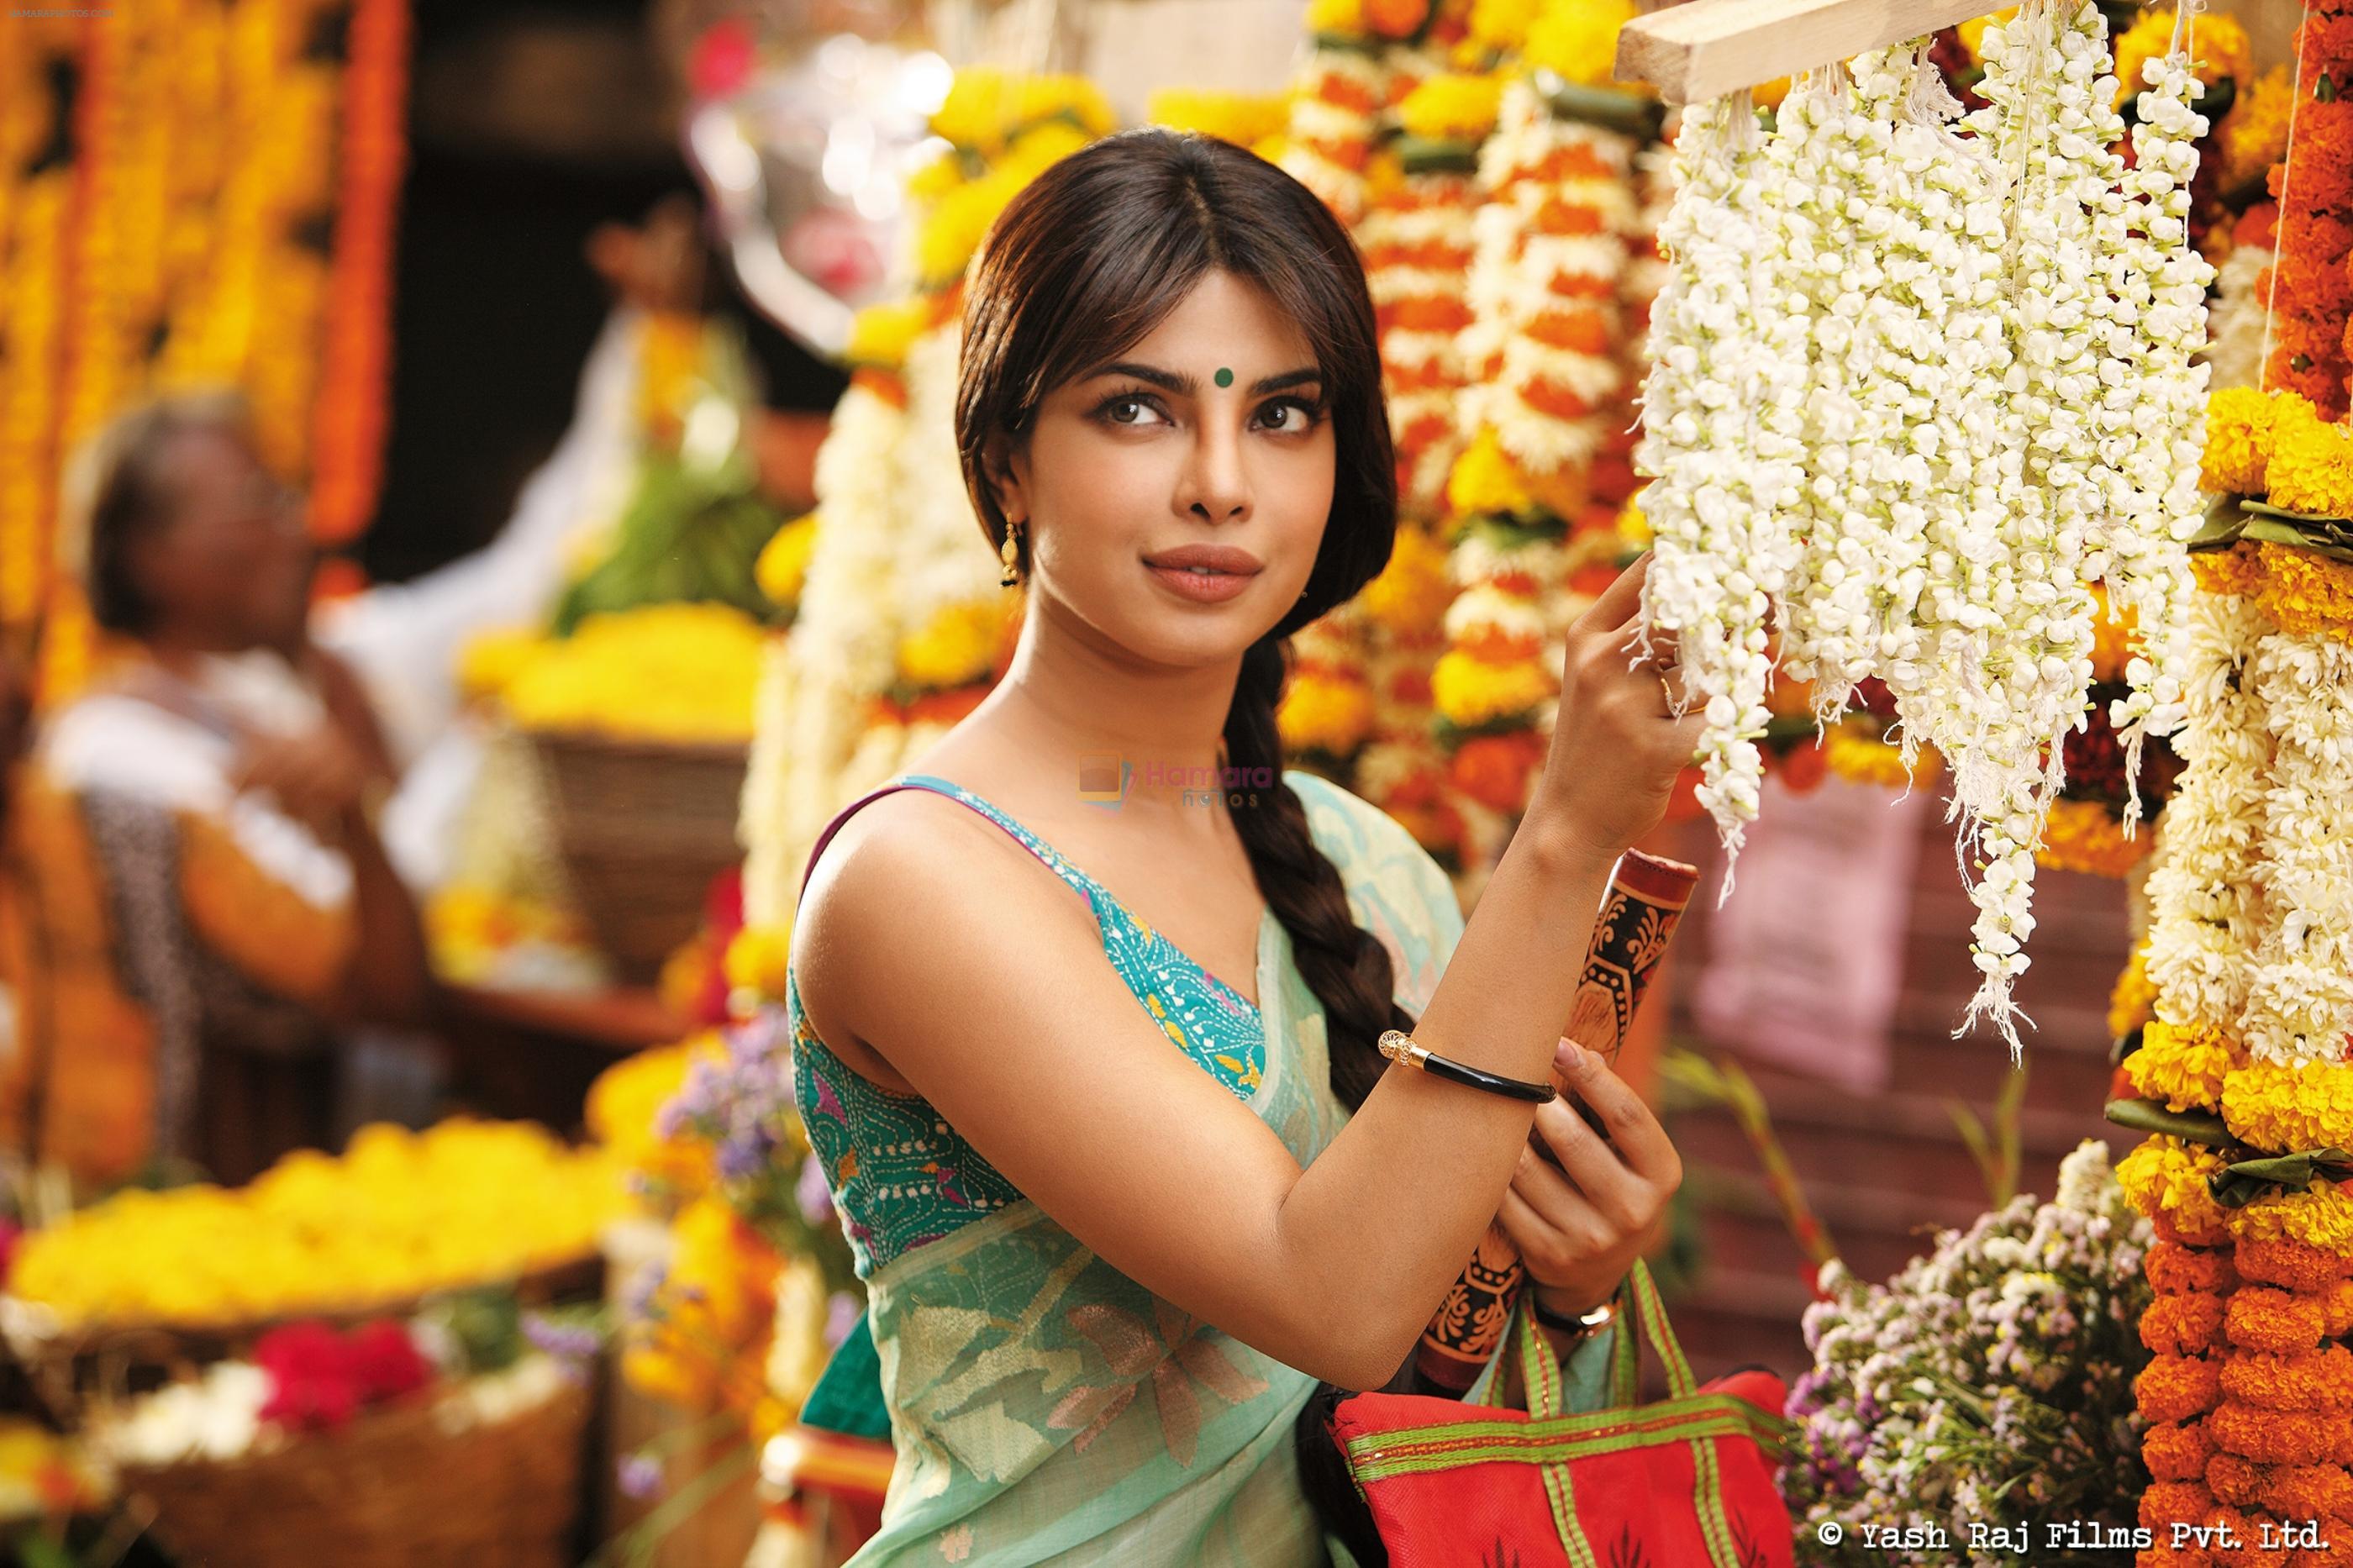 Priyanka Chopra in the still from movie Gunday